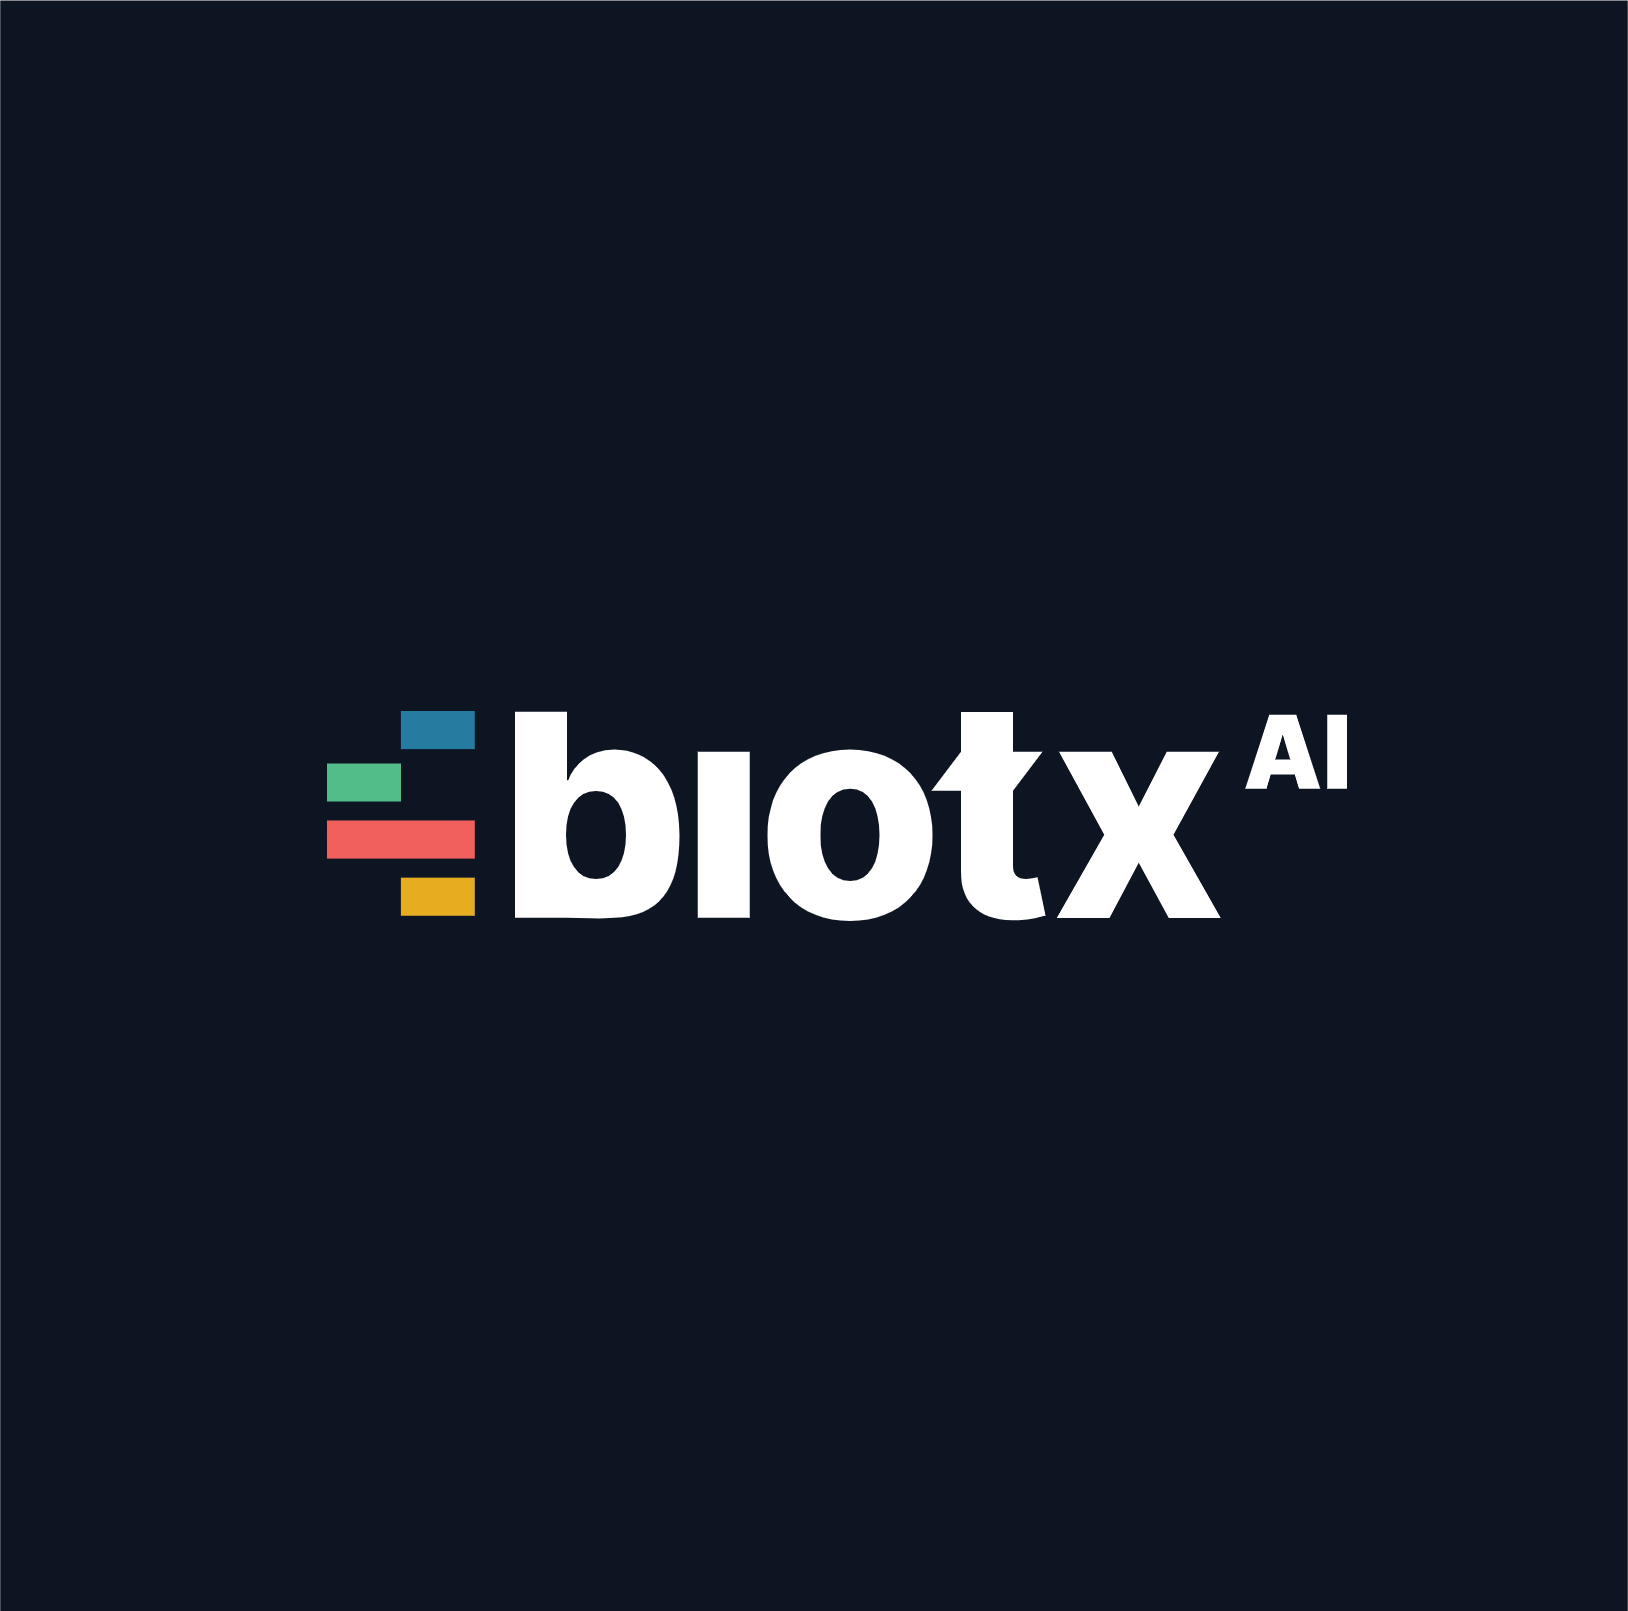 Biotx